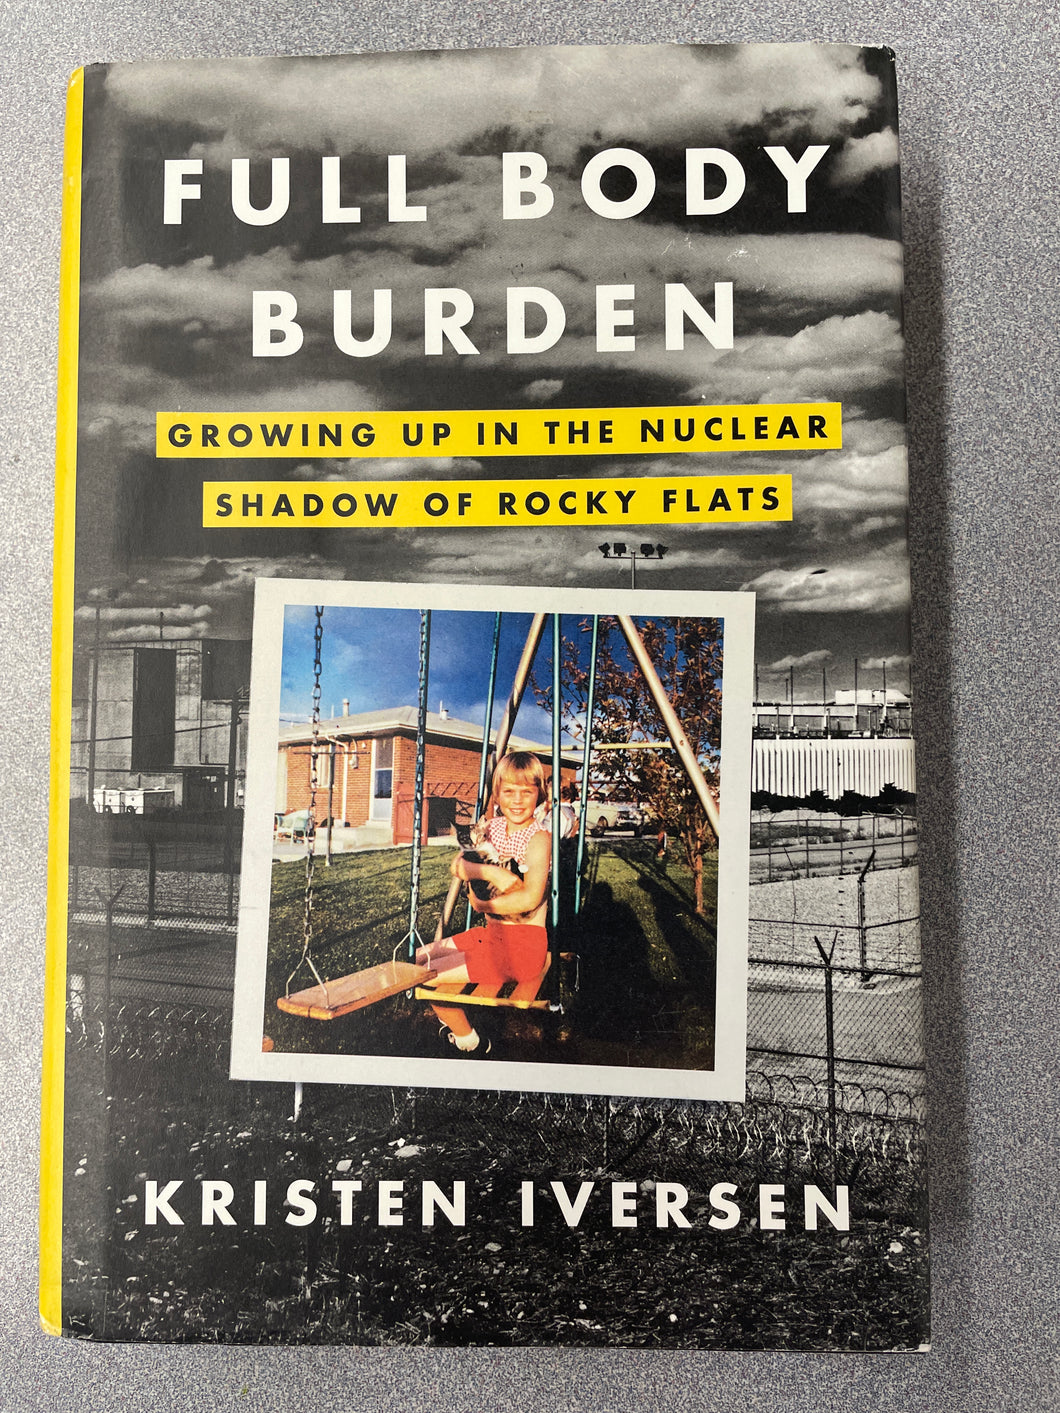 Full Body Burden: Growing Up in the Nuclear Shadow of Rocky Flats, iversen, Kristen [2012] TS 3/24